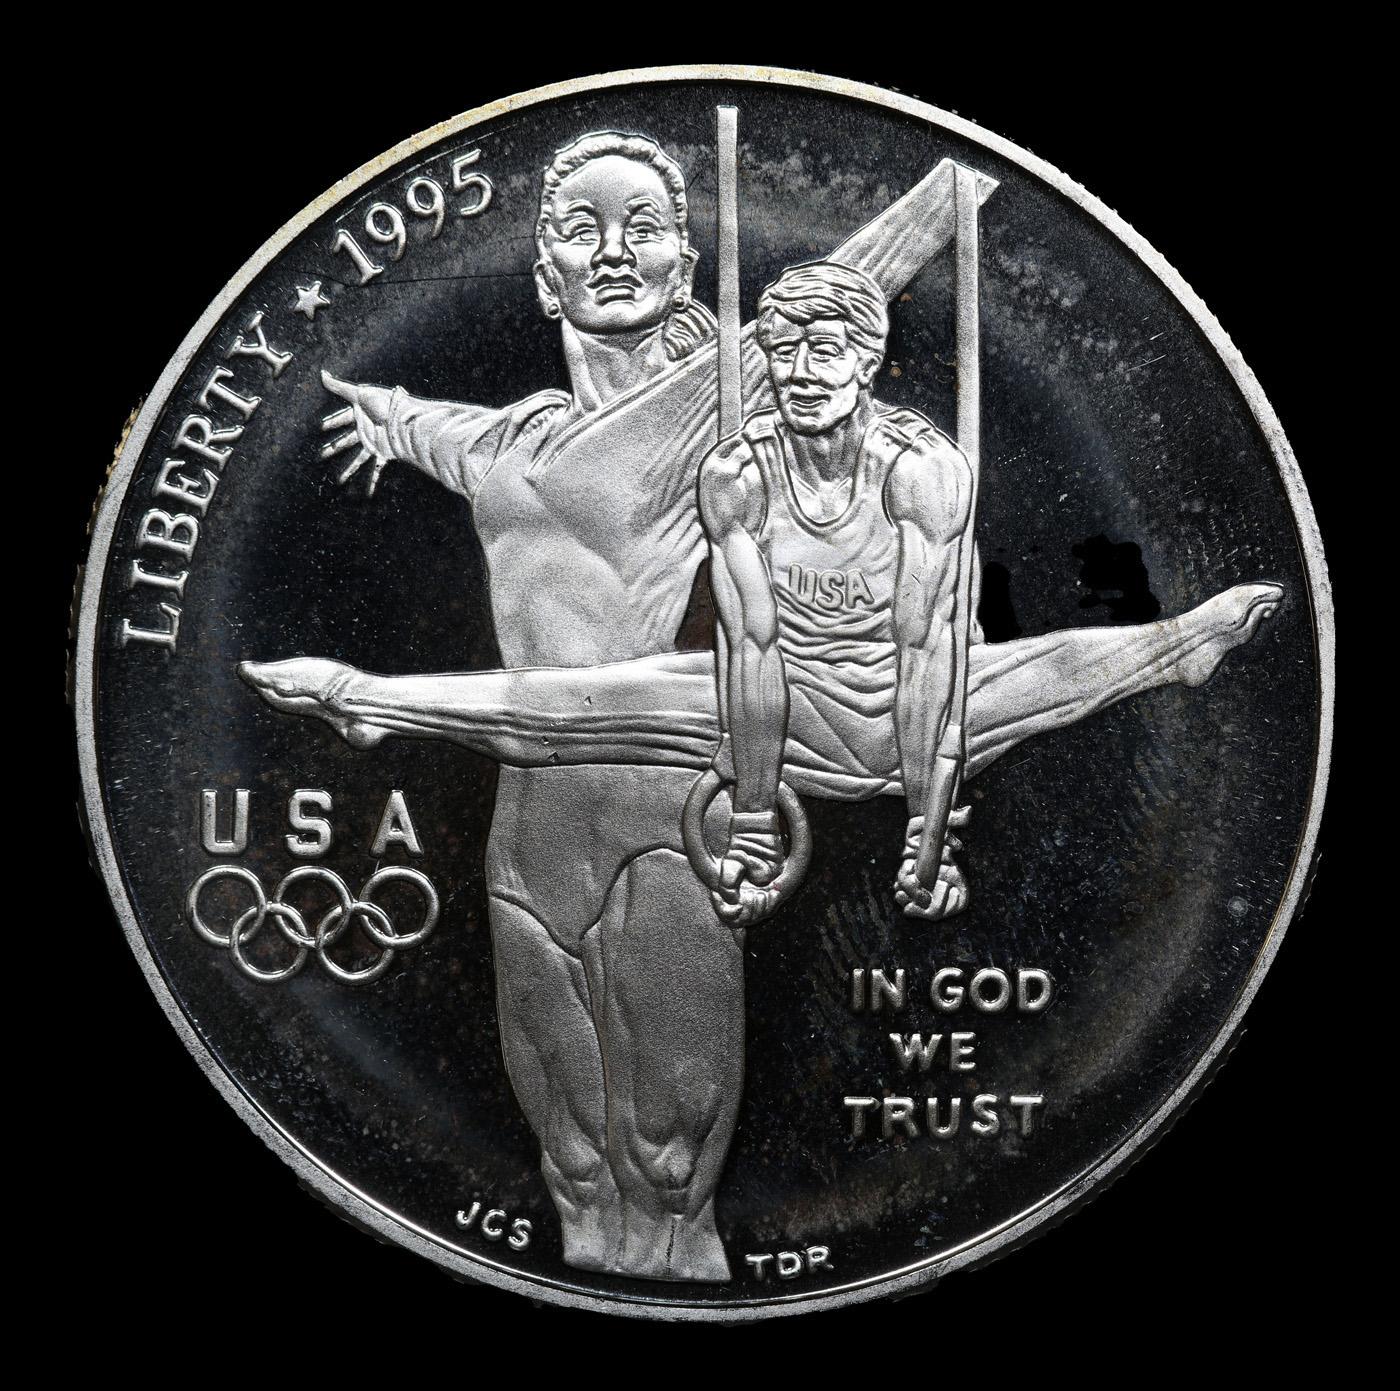 Proof 1995-P Olympic Gymnast Modern Commem Dollar 1 Grades GEM++ Proof Deep Cameo